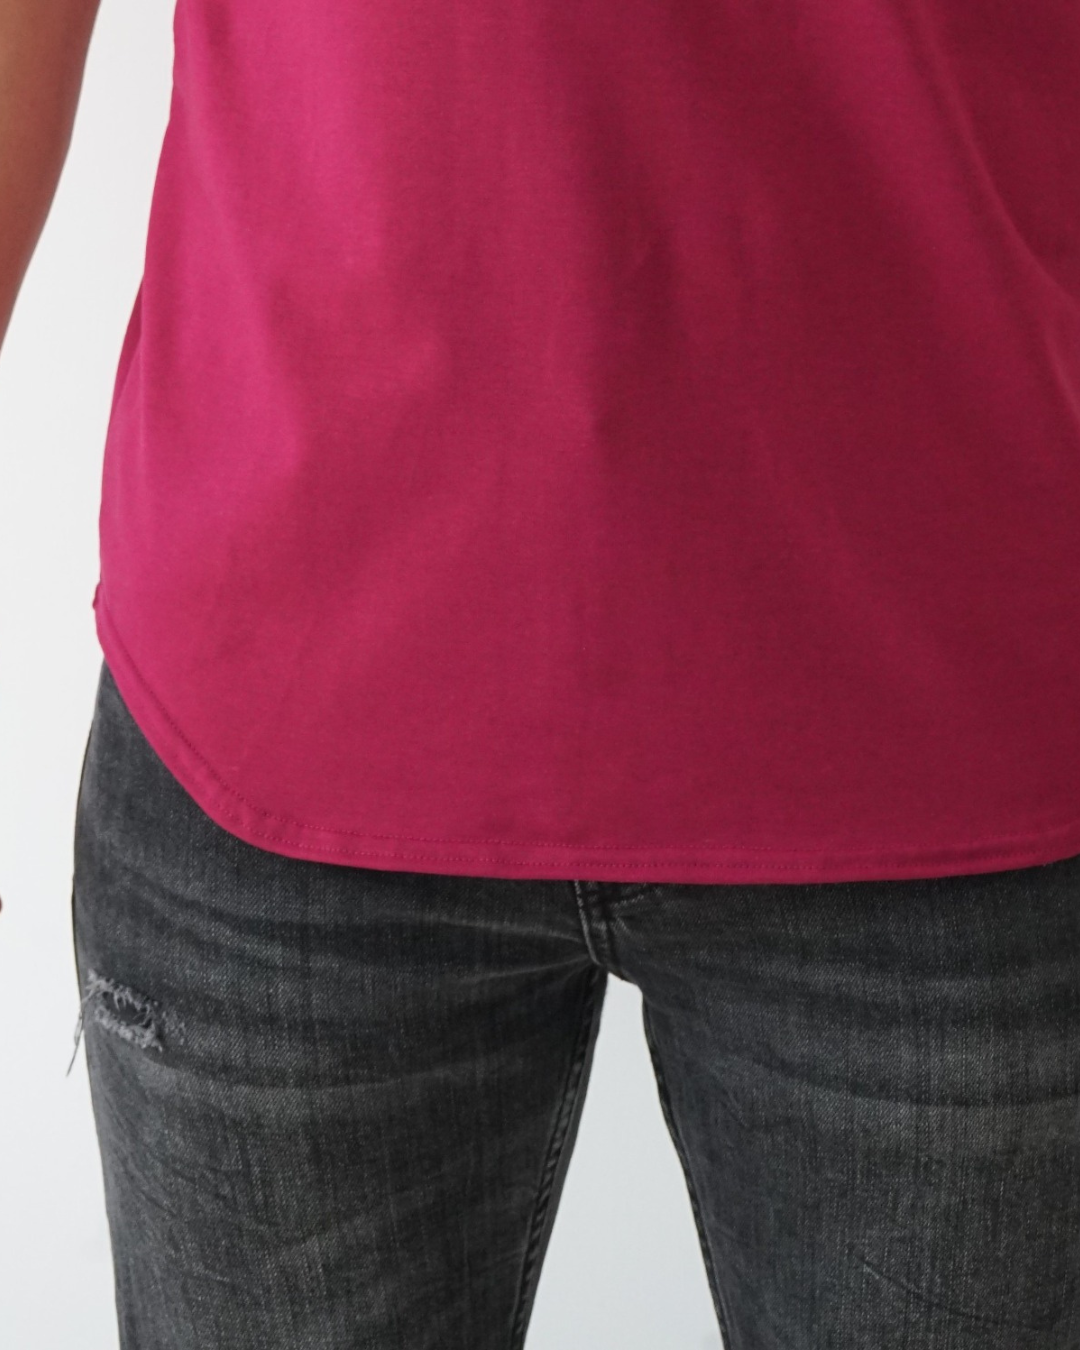 Cherry Wine T-shirt - Short Sleeve Crew Neck Original Bottom